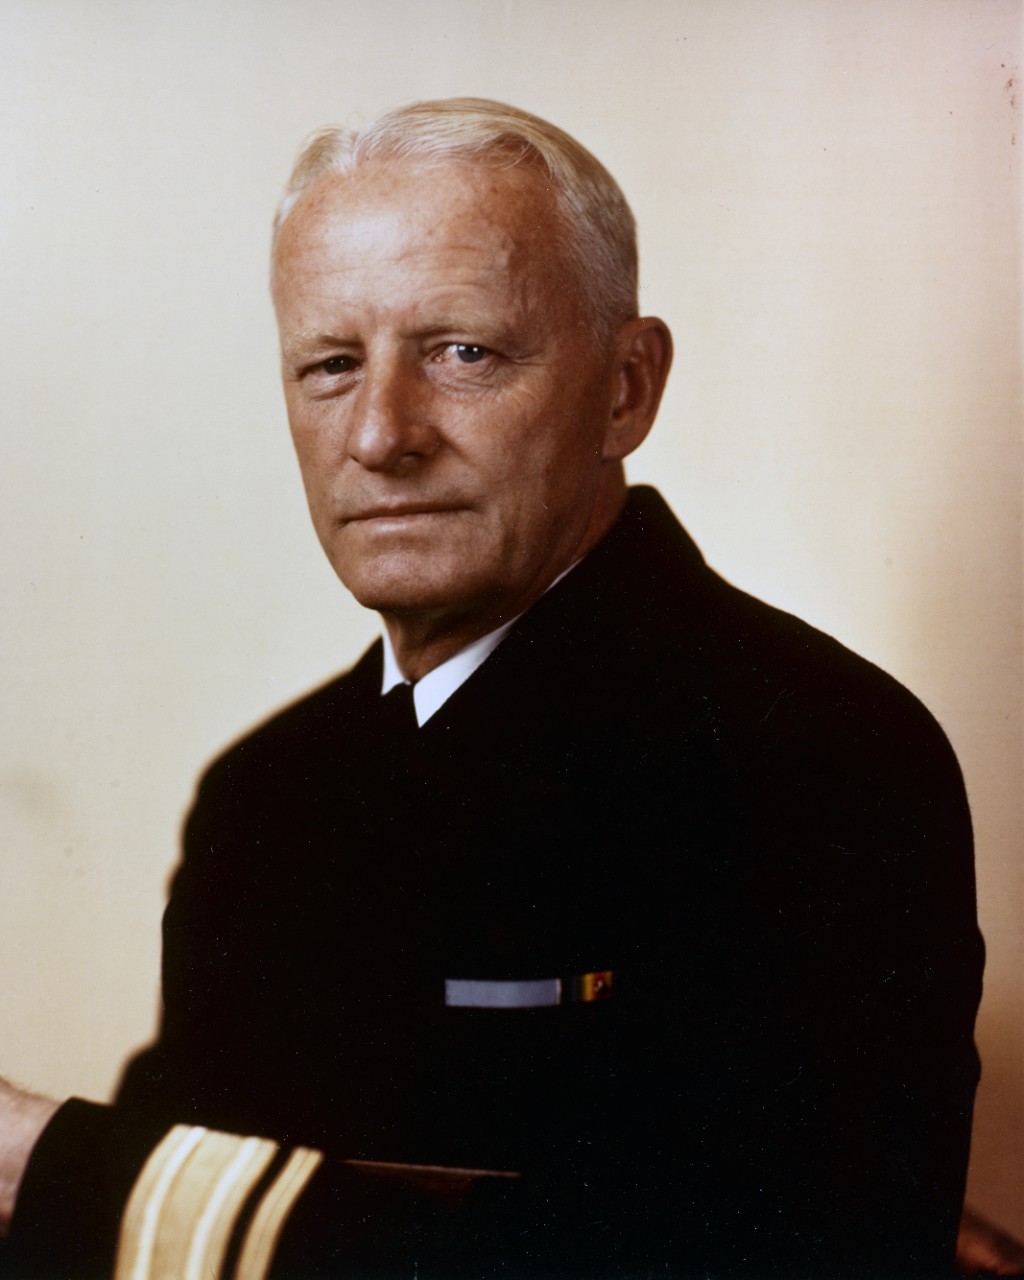 Photo #: 80-G-K-13455 Rear Admiral Chester W. Nimitz, USN